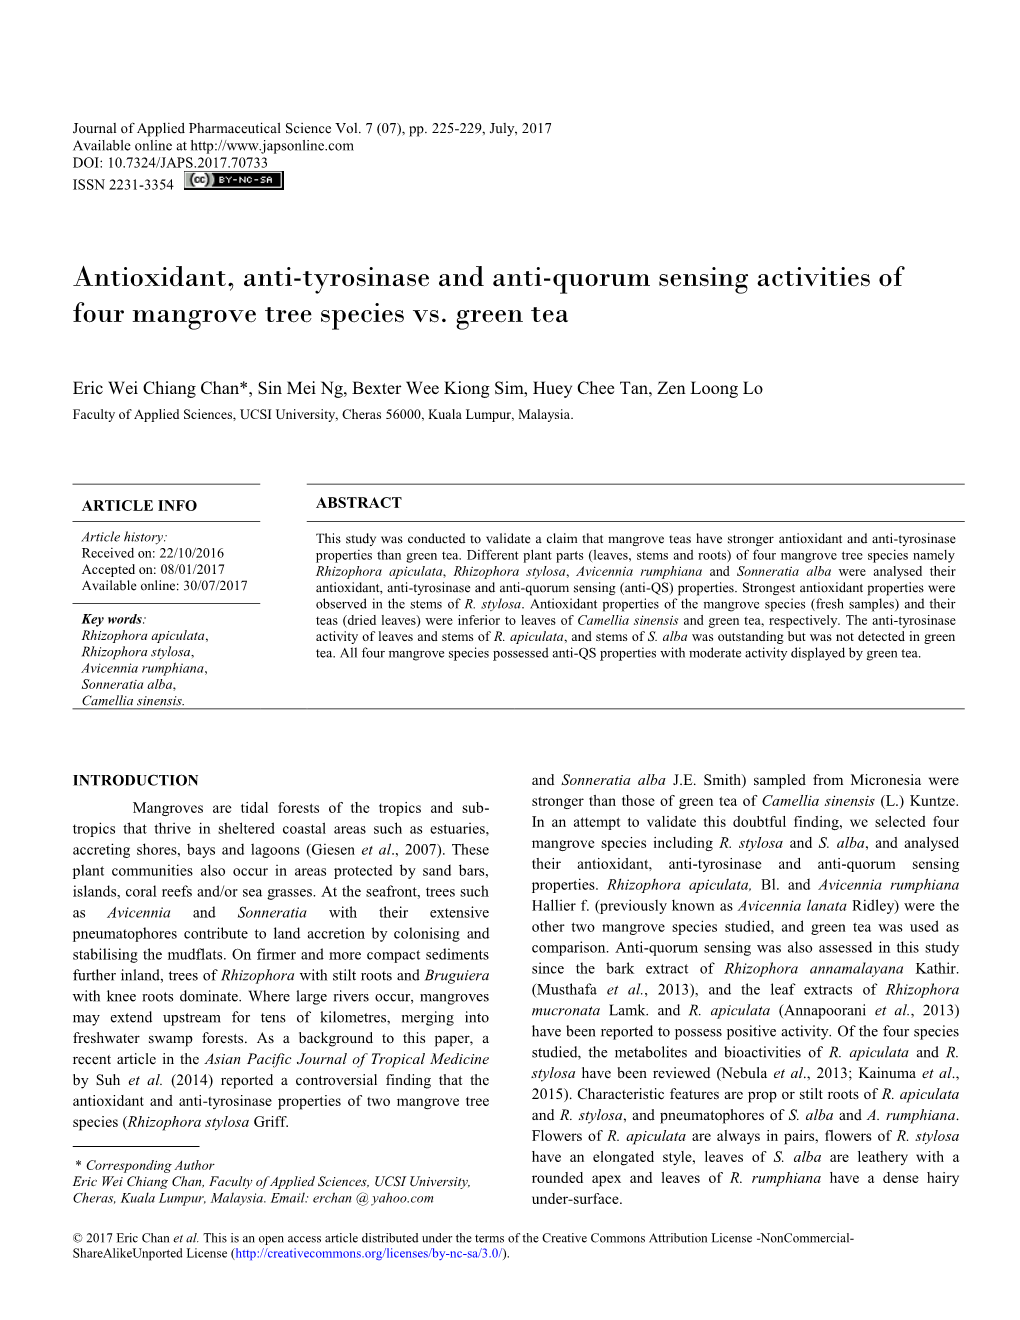 Antioxidant, Anti-Tyrosinase and Anti-Quorum Sensing Activities of Four Mangrove Tree Species Vs